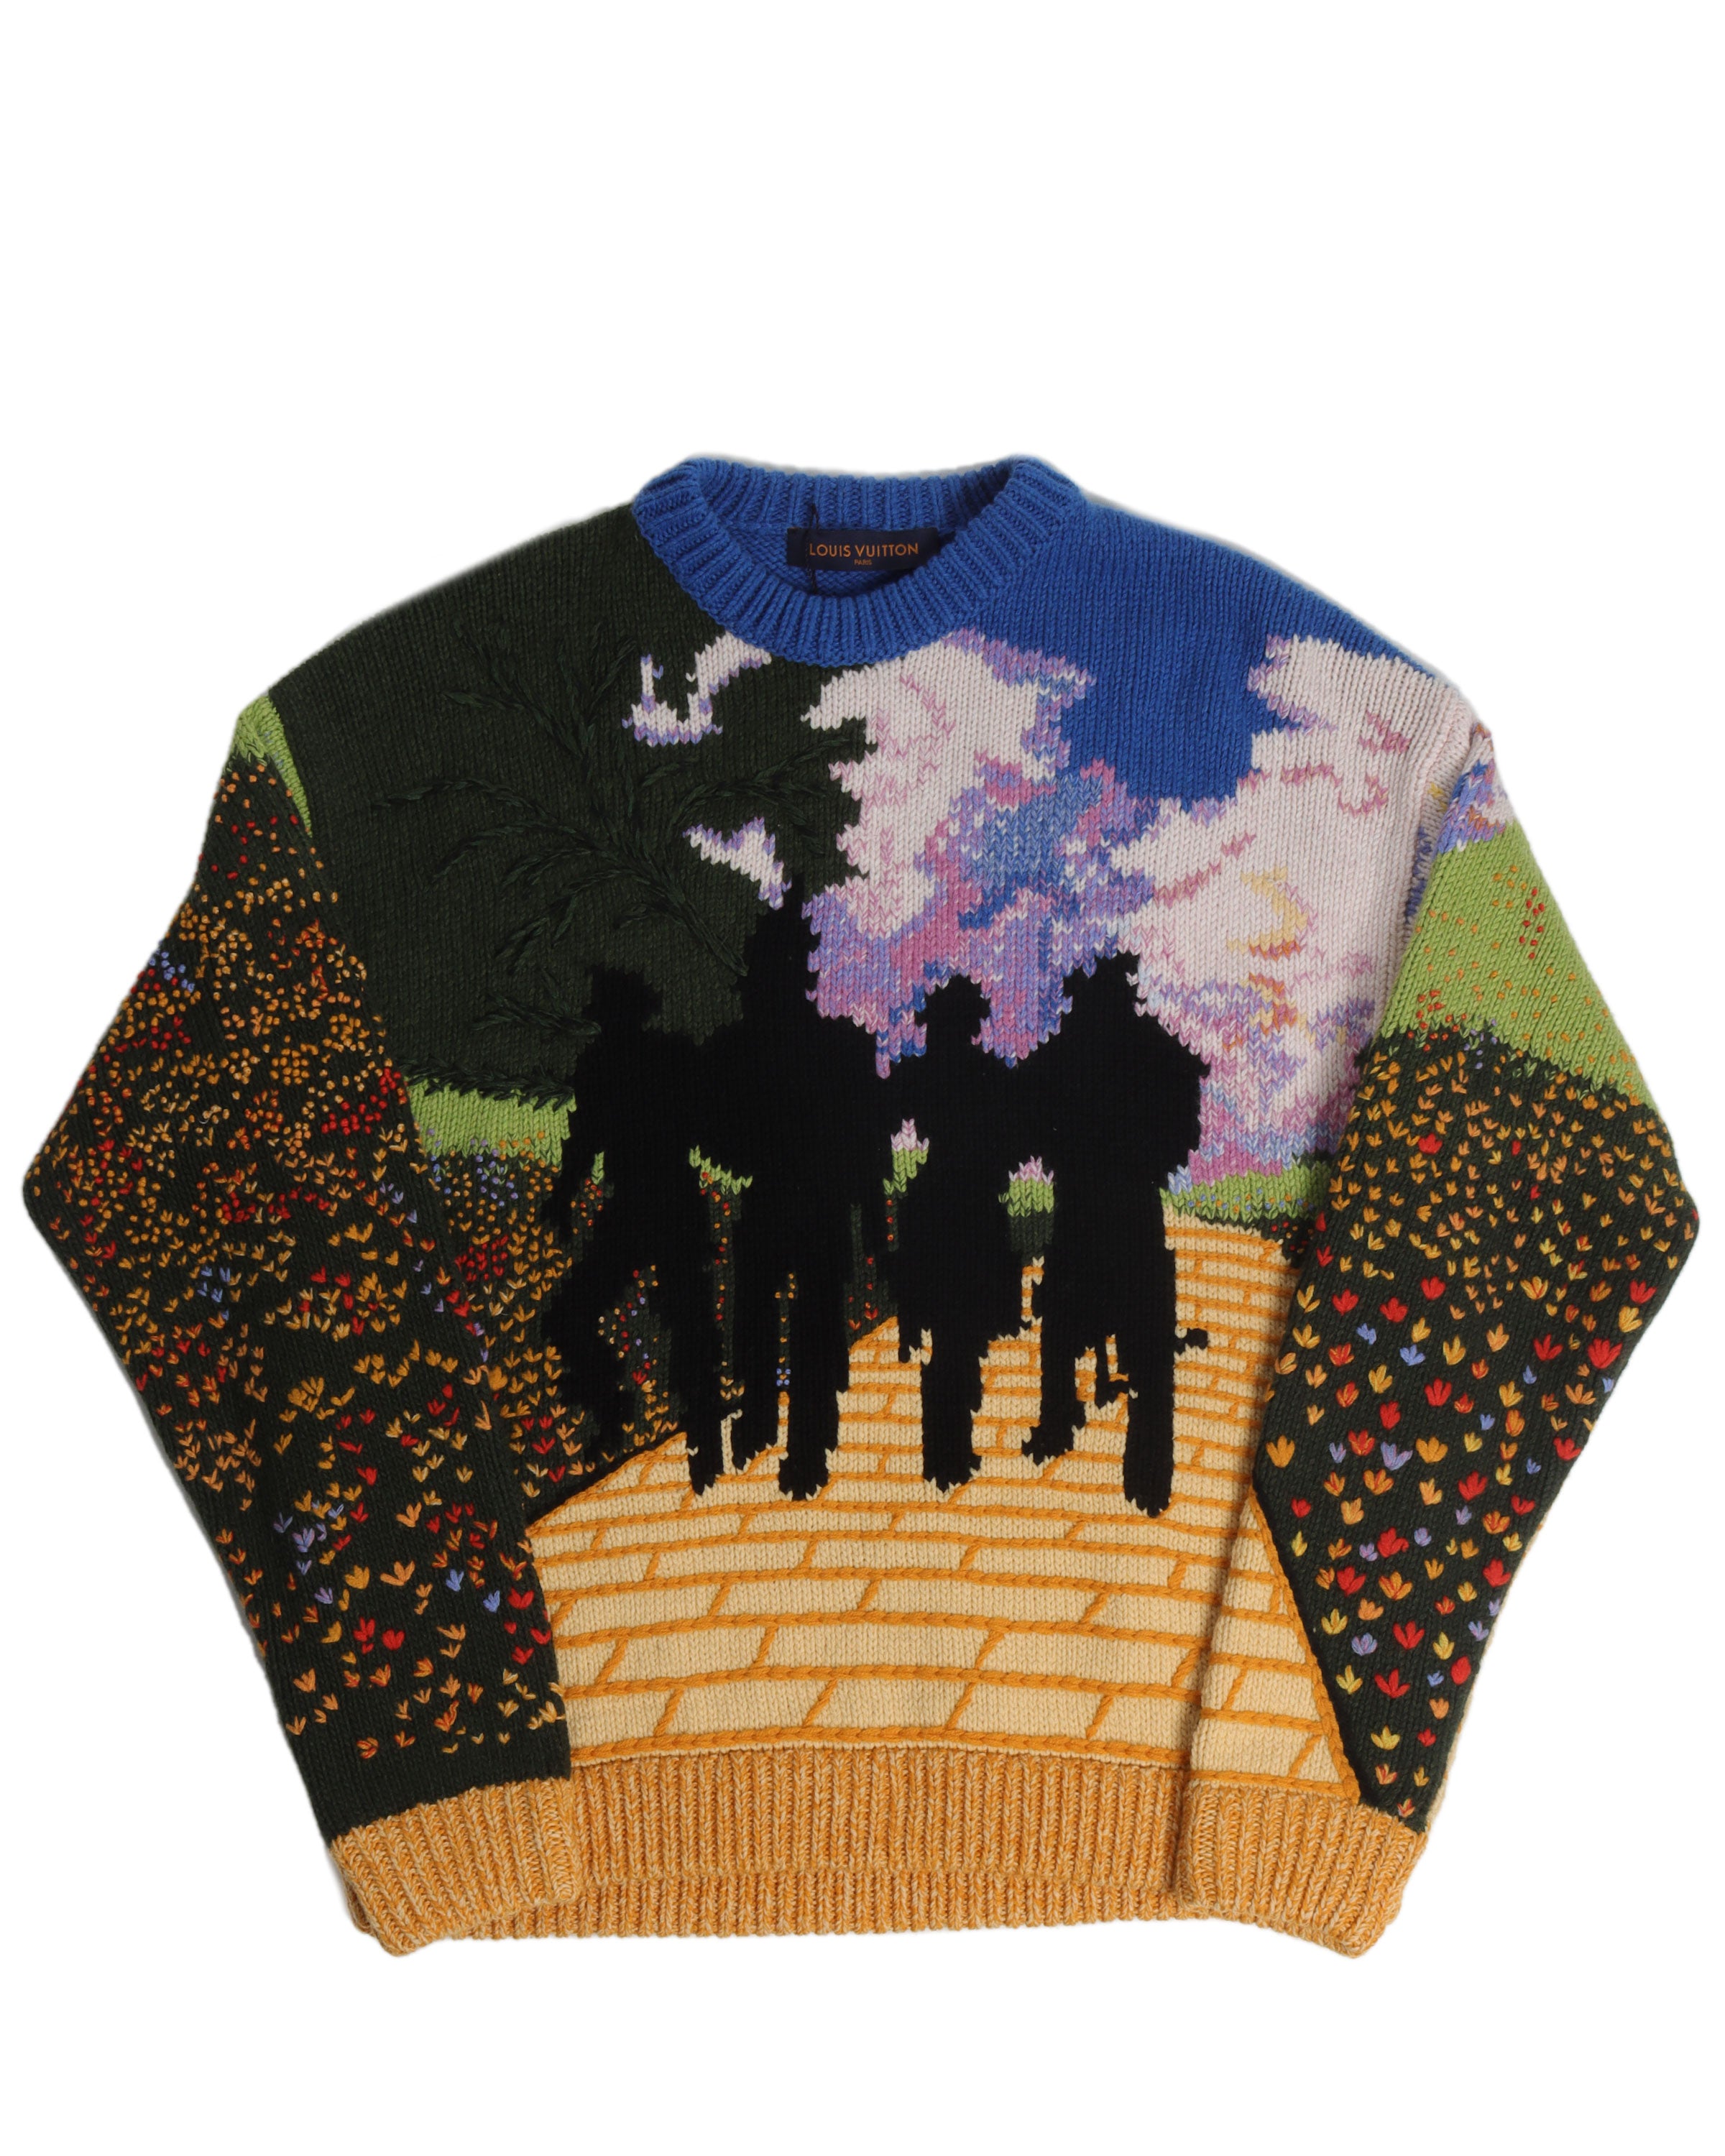 SS19 Louis Vuitton 'Wizard of Oz' Rainbow Walk Knitted Sweater